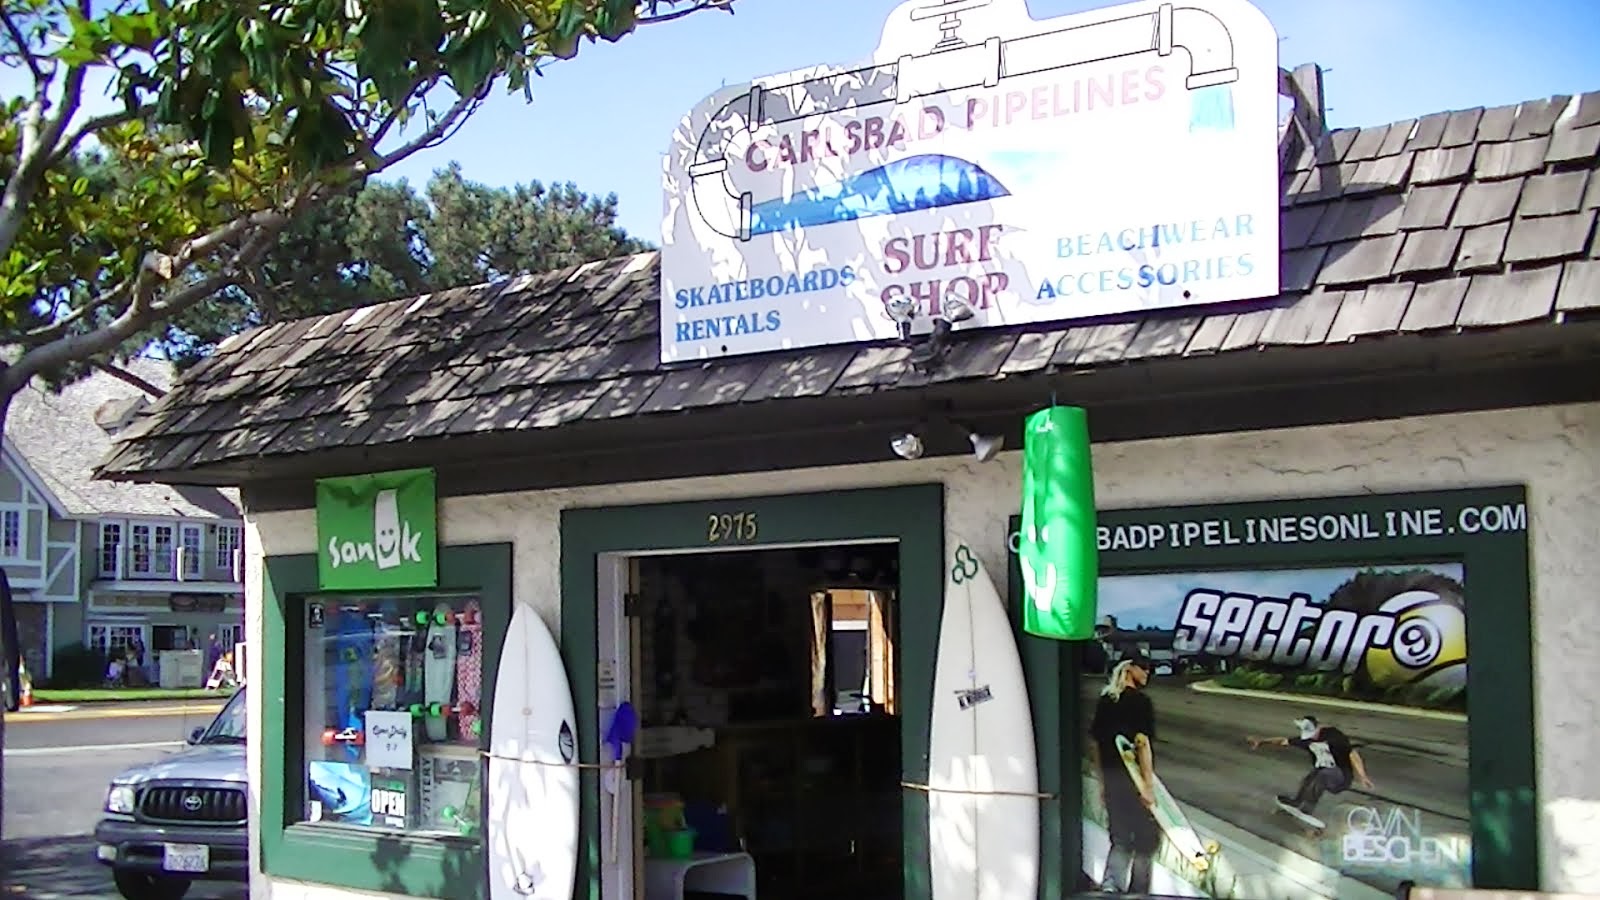 Carlsbad pipelines surf shop